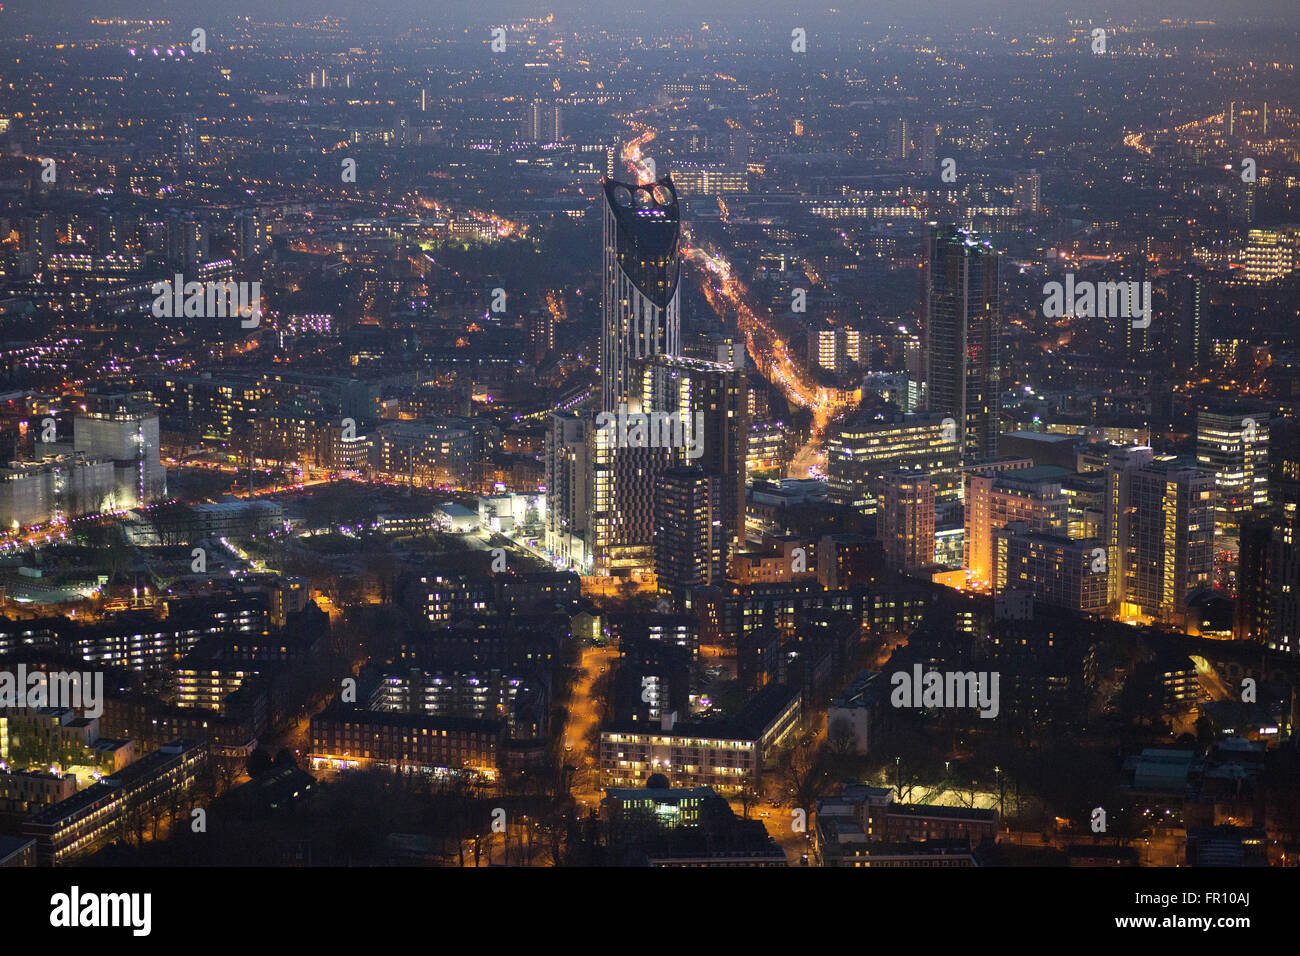 Elefant & Burg Station, Nacht Luftaufnahme, London, UK Stockfoto